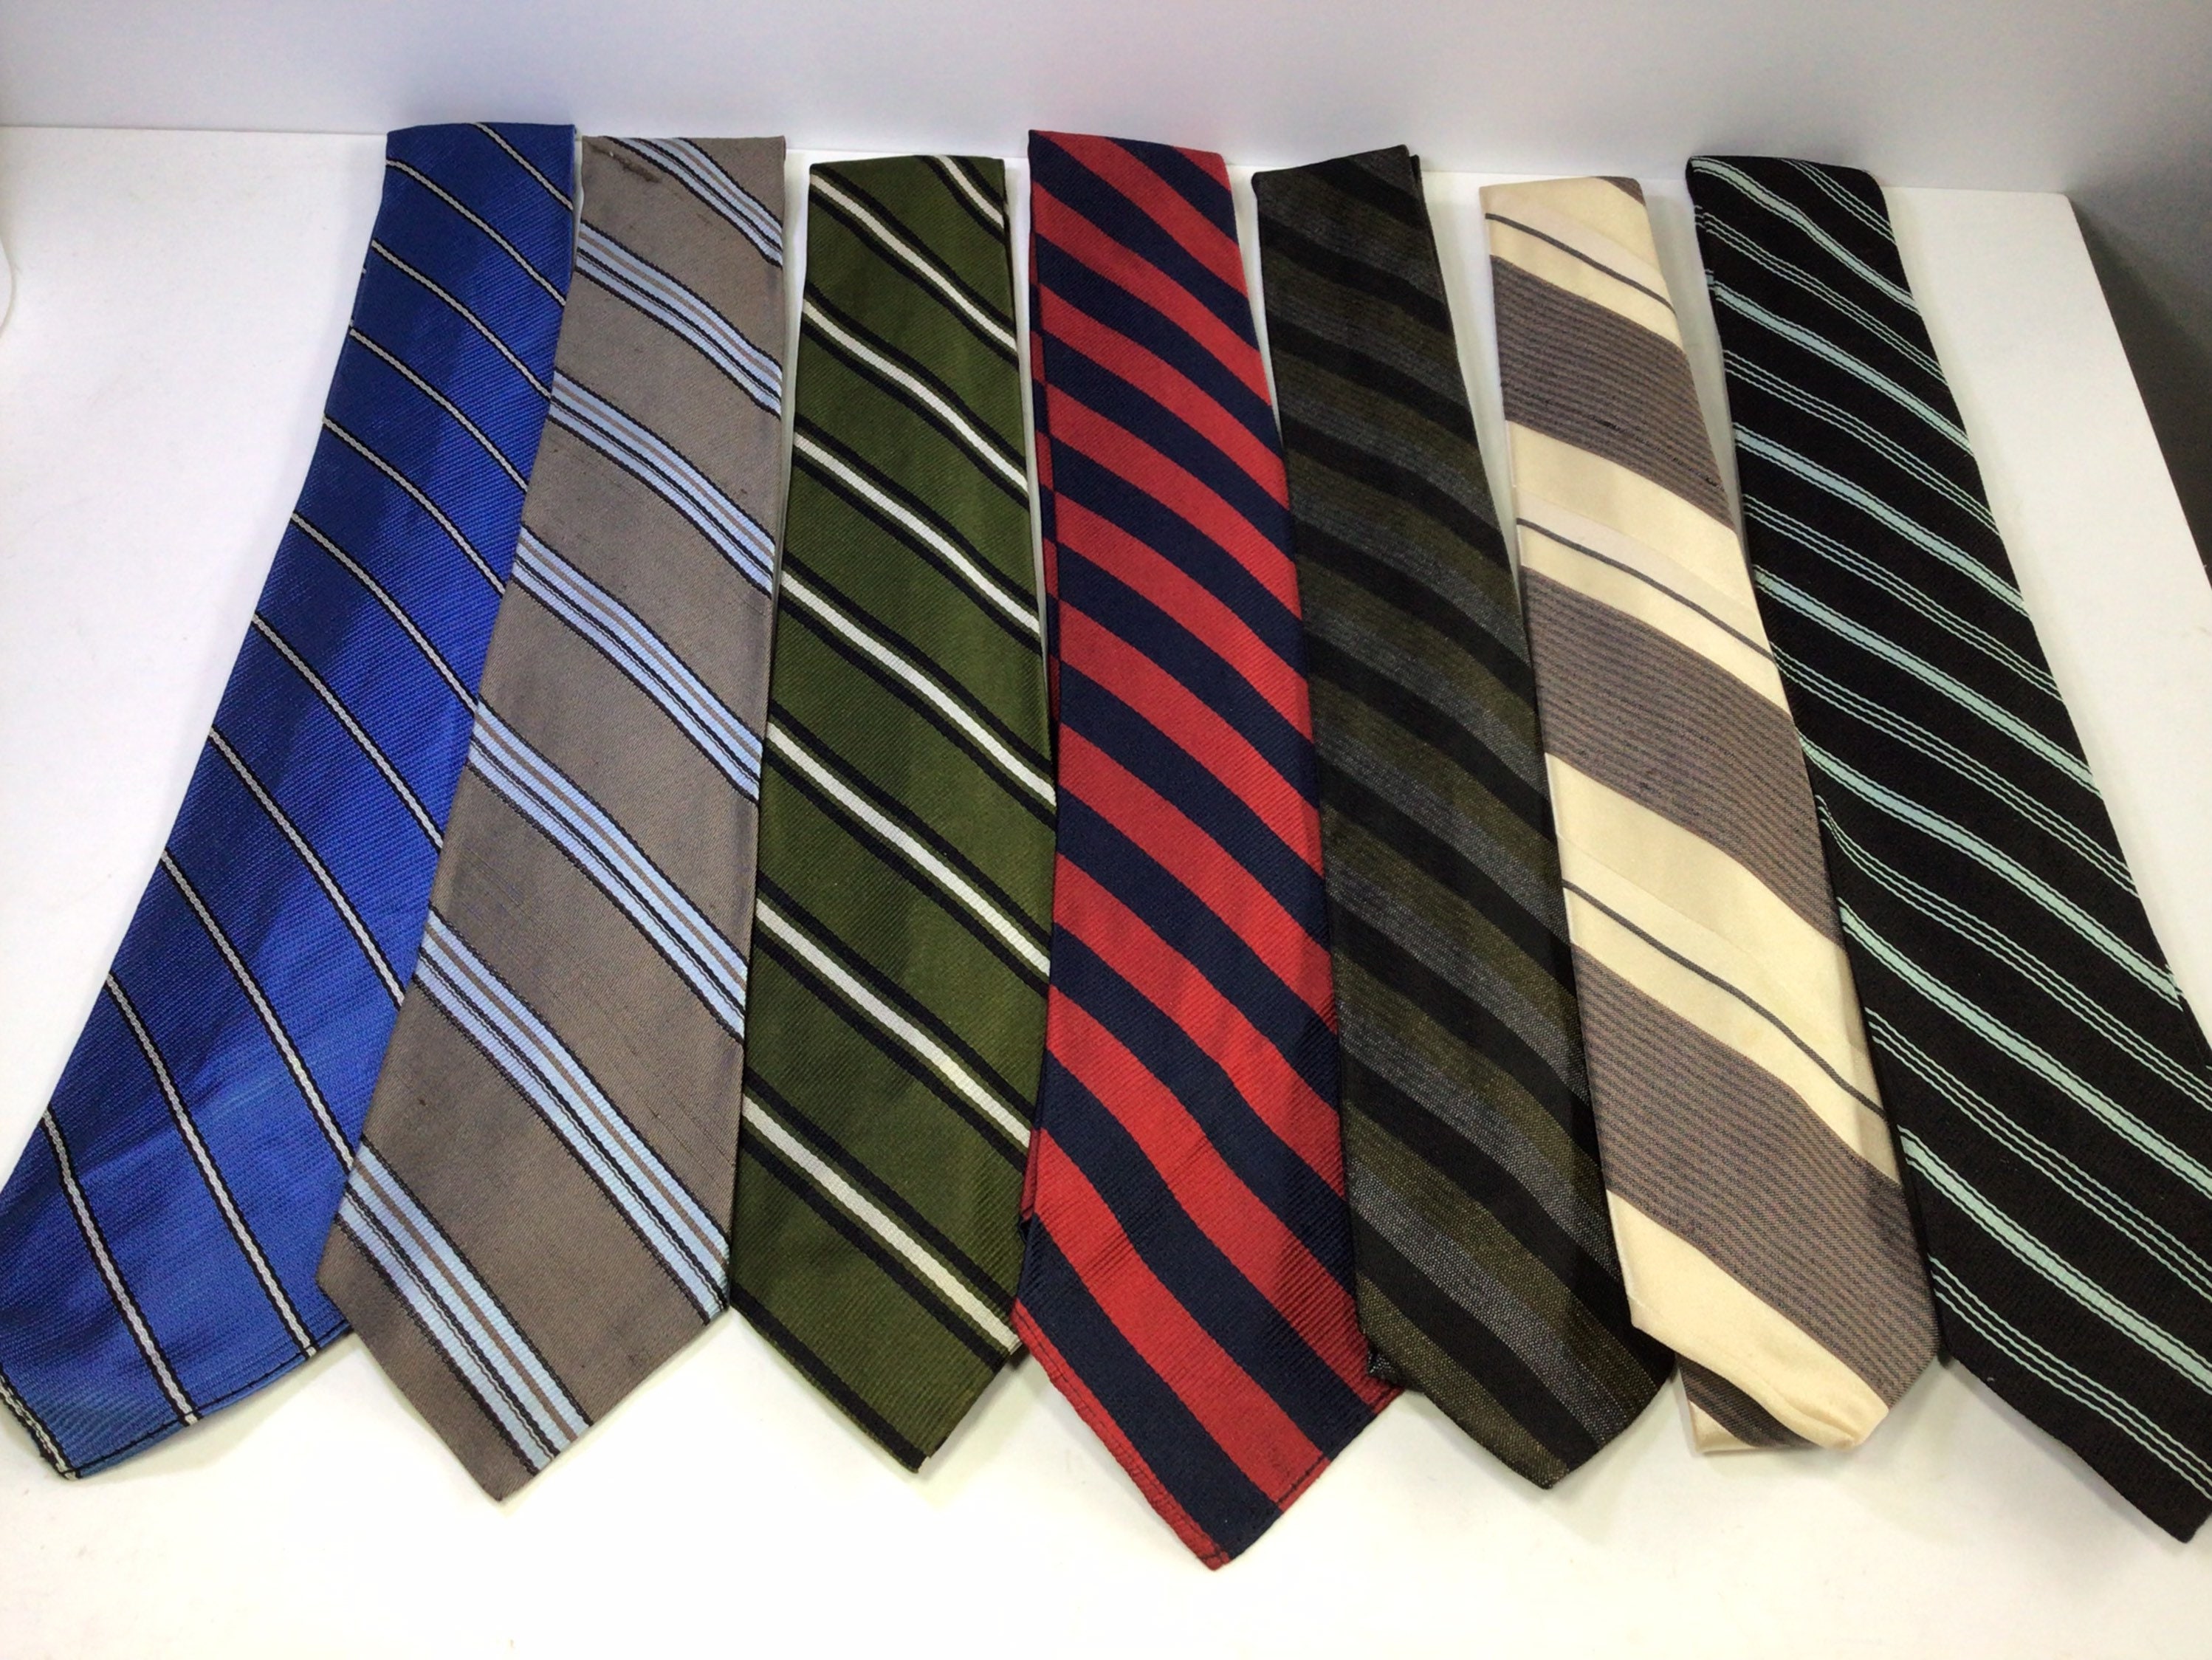 Preppy Slim Cut Striped Tie in Silk Wool Blend